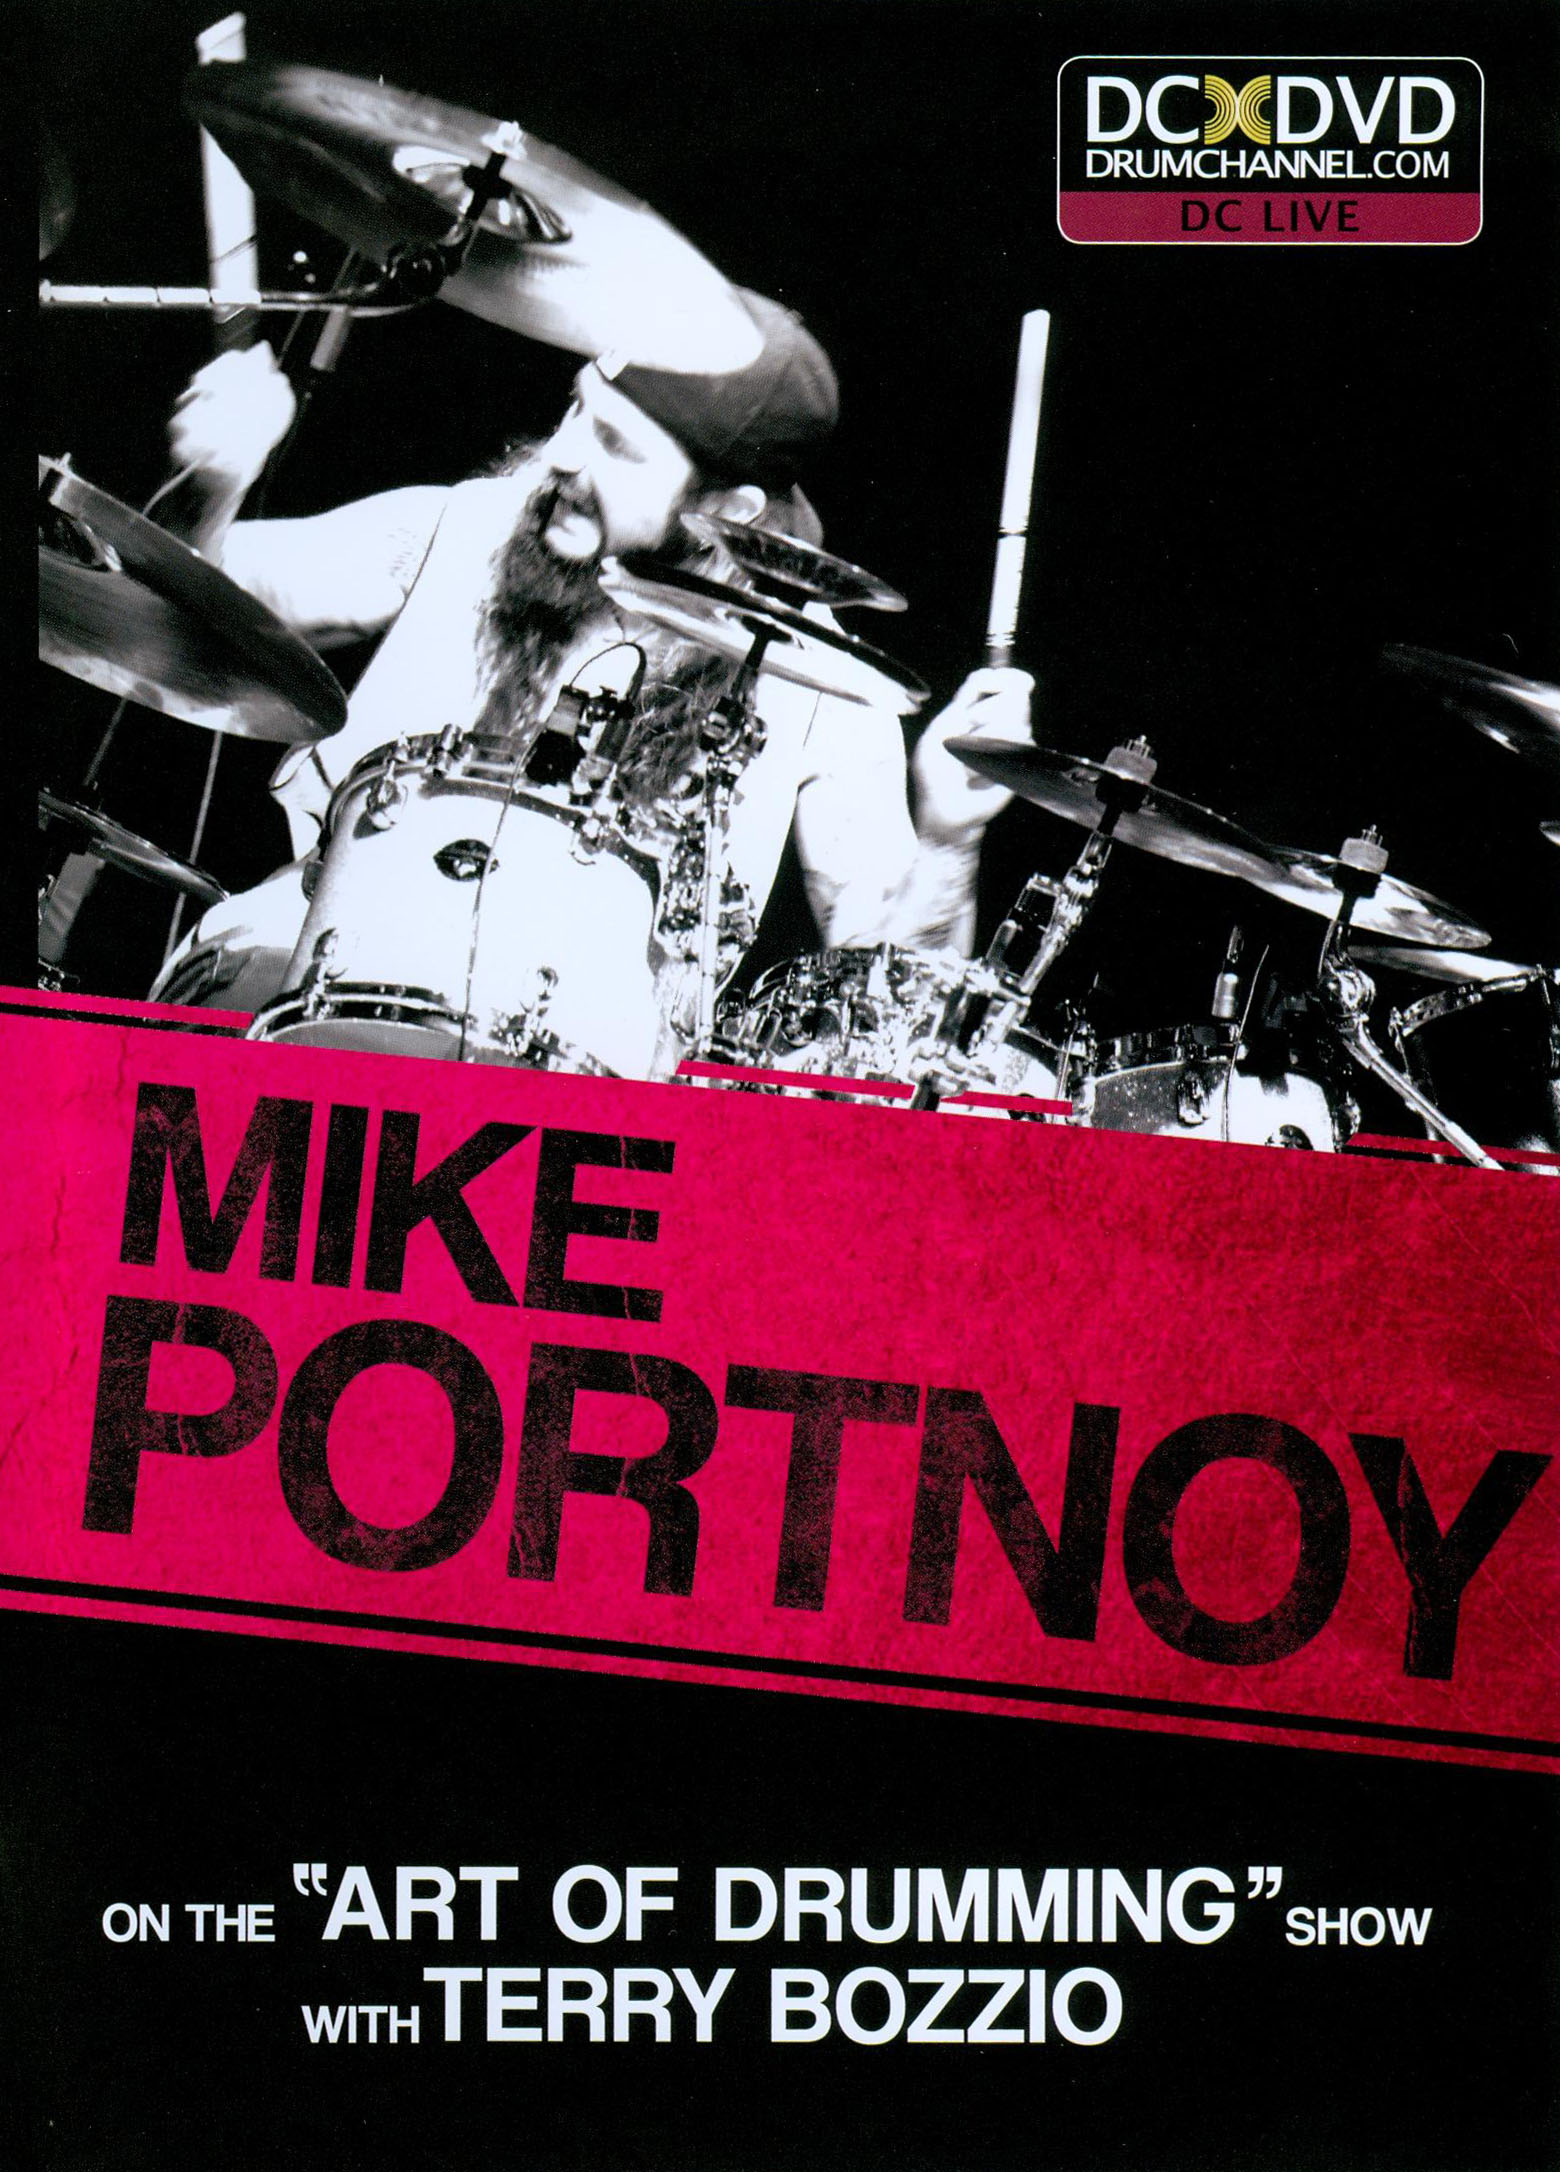 Mike Portnoy Drum Kit